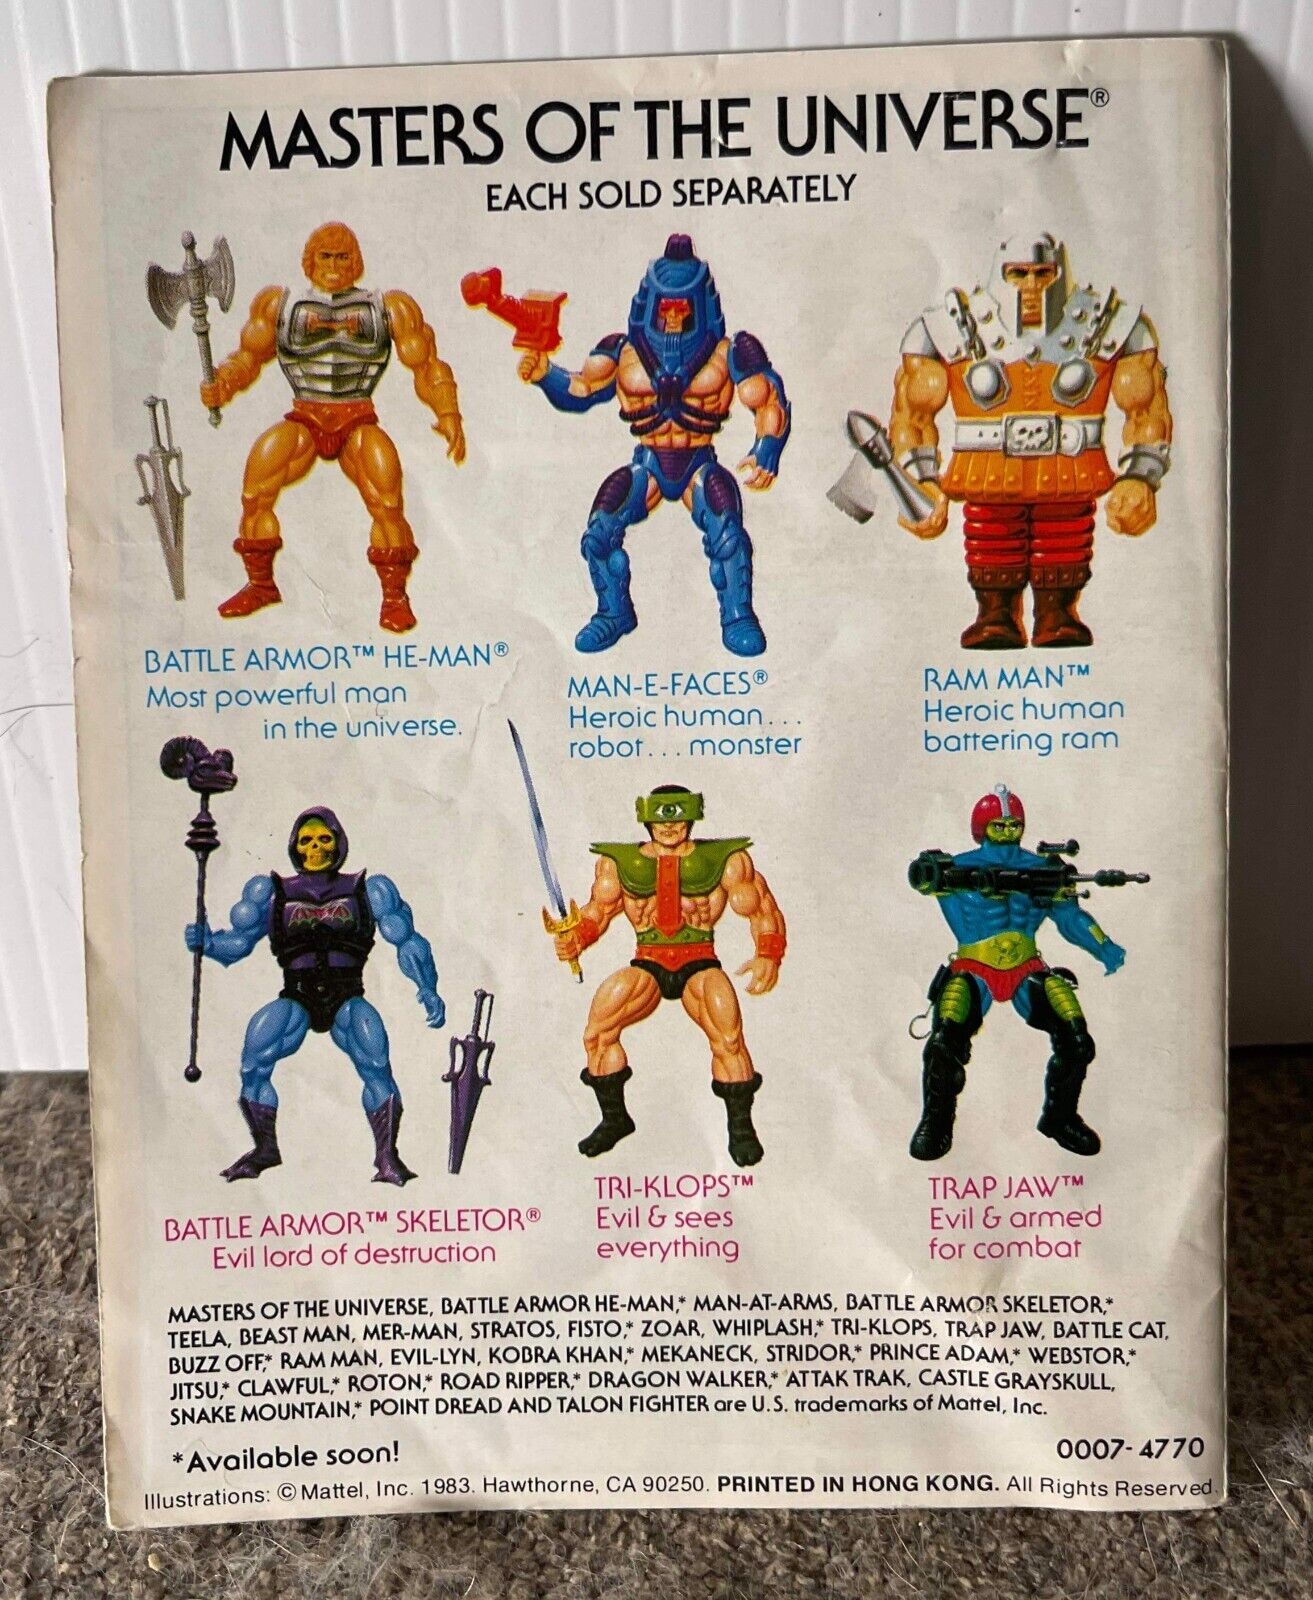 He-Man Masters of The Universe Masks of Power Mini Comic Book 1983 MOTU